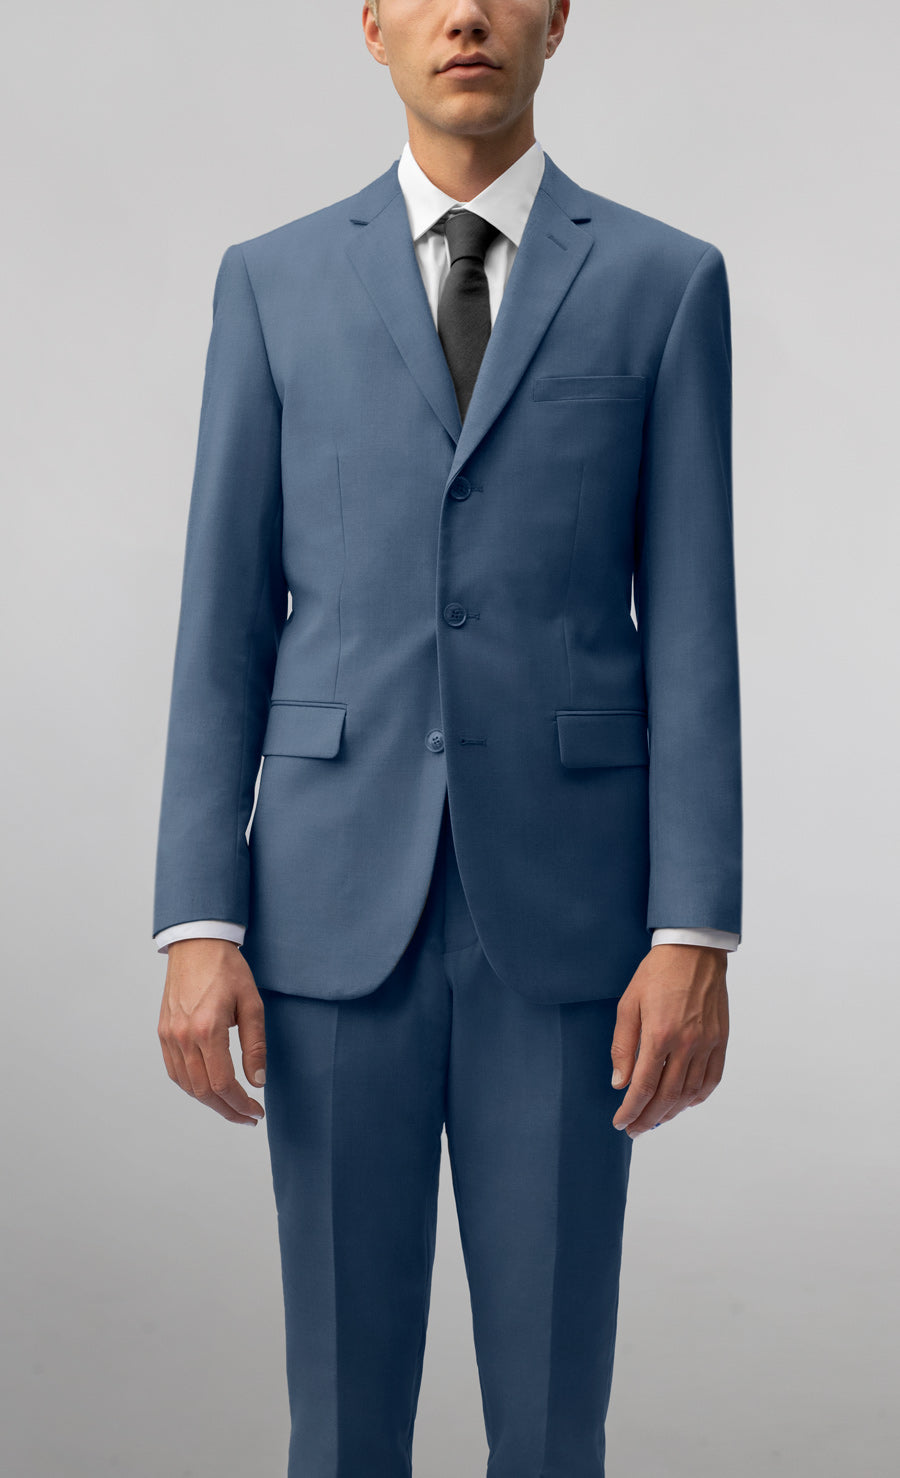 Slate Blue Three Button Suit